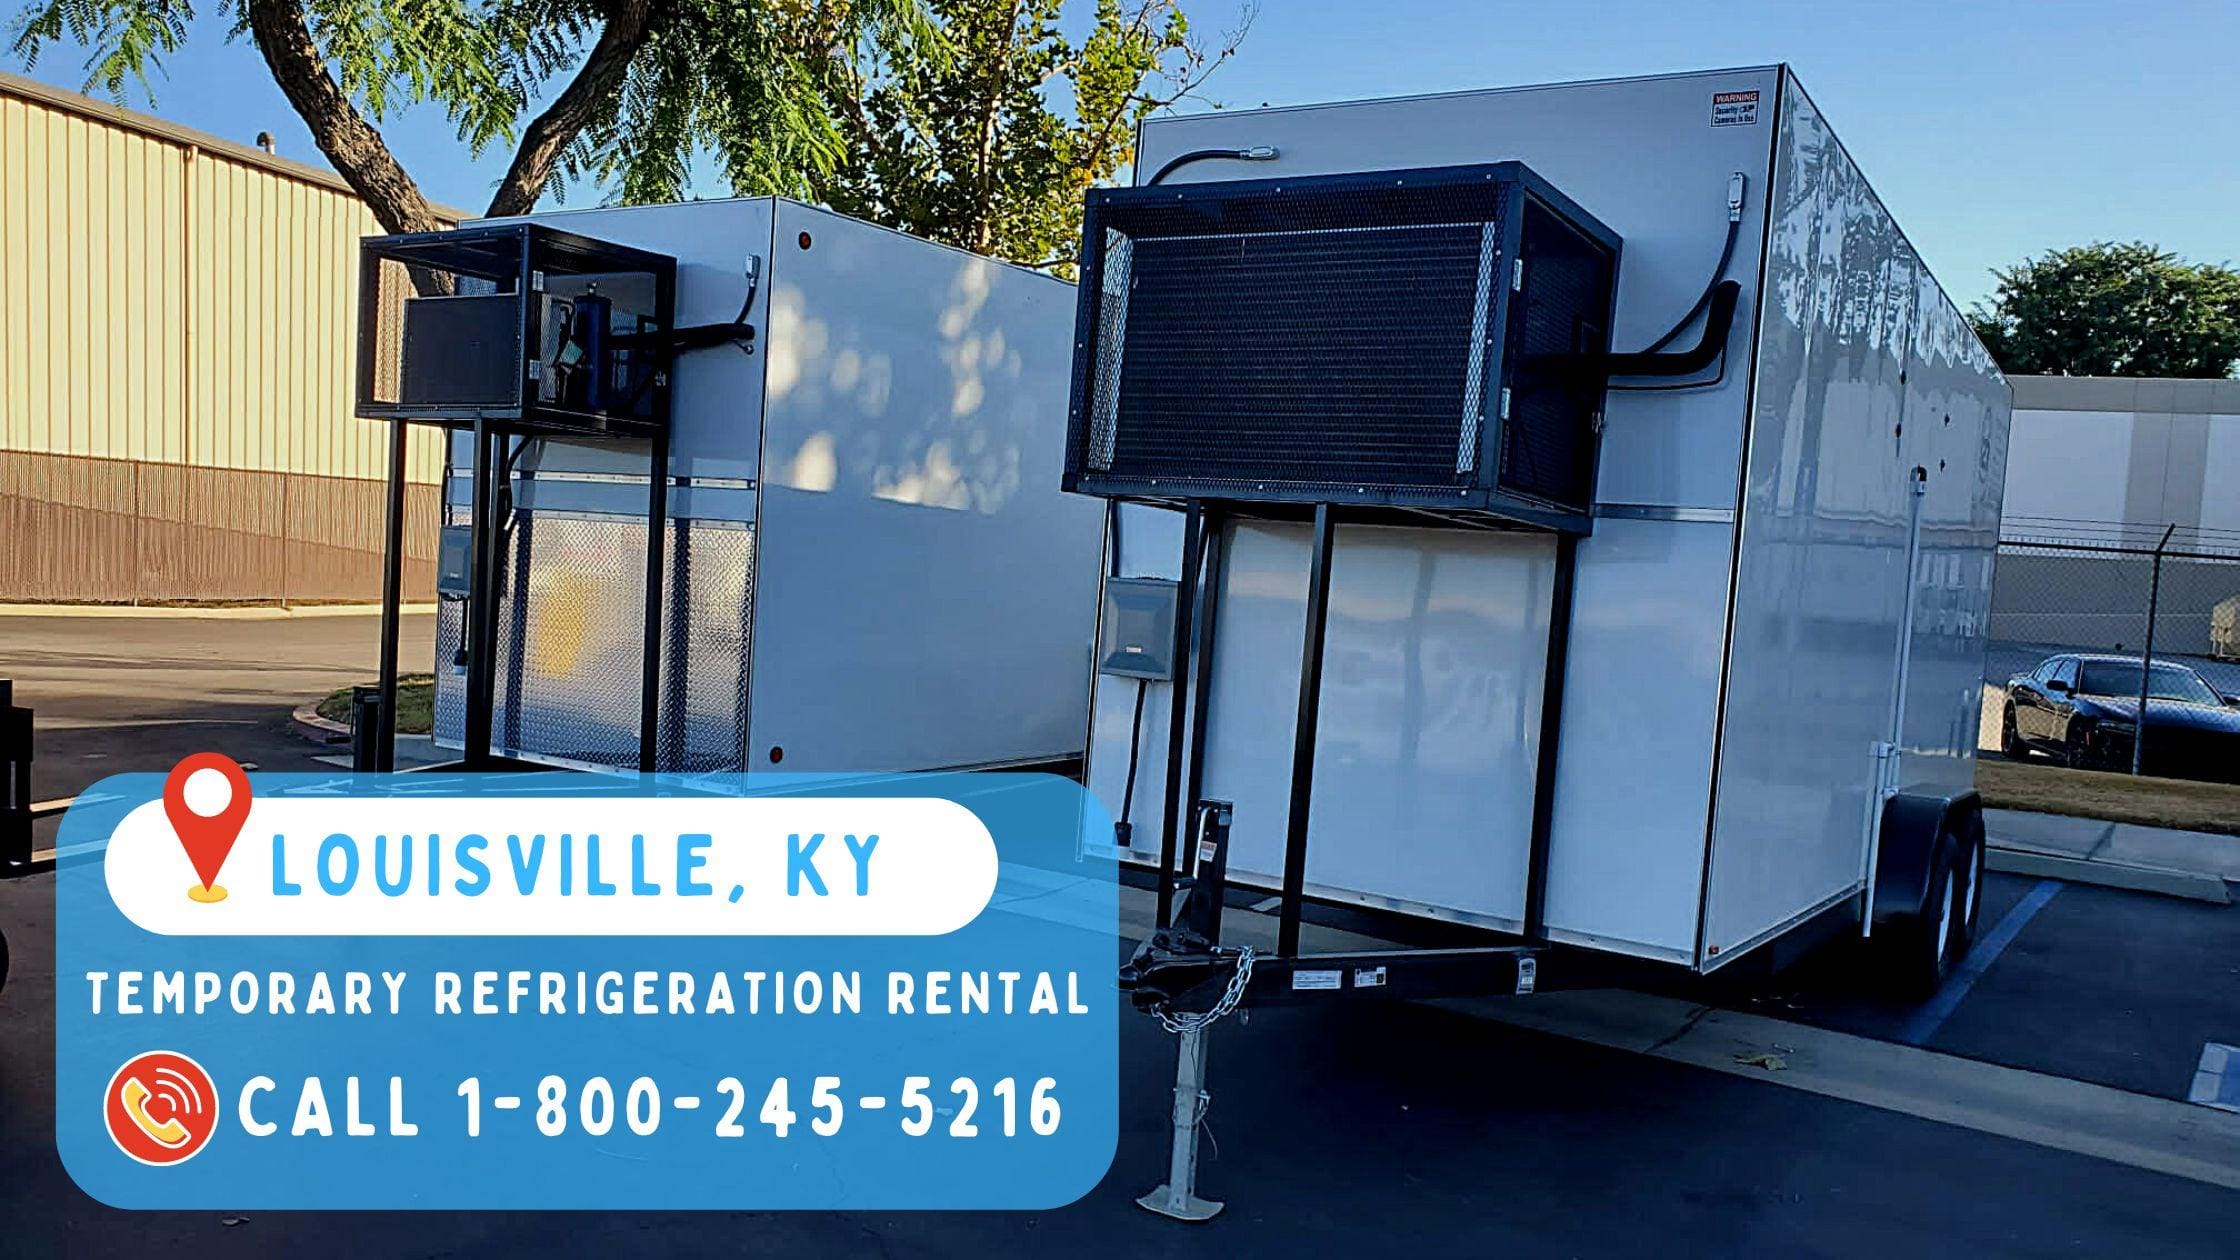 Temporary Refrigeration Rental in Louisville, KY